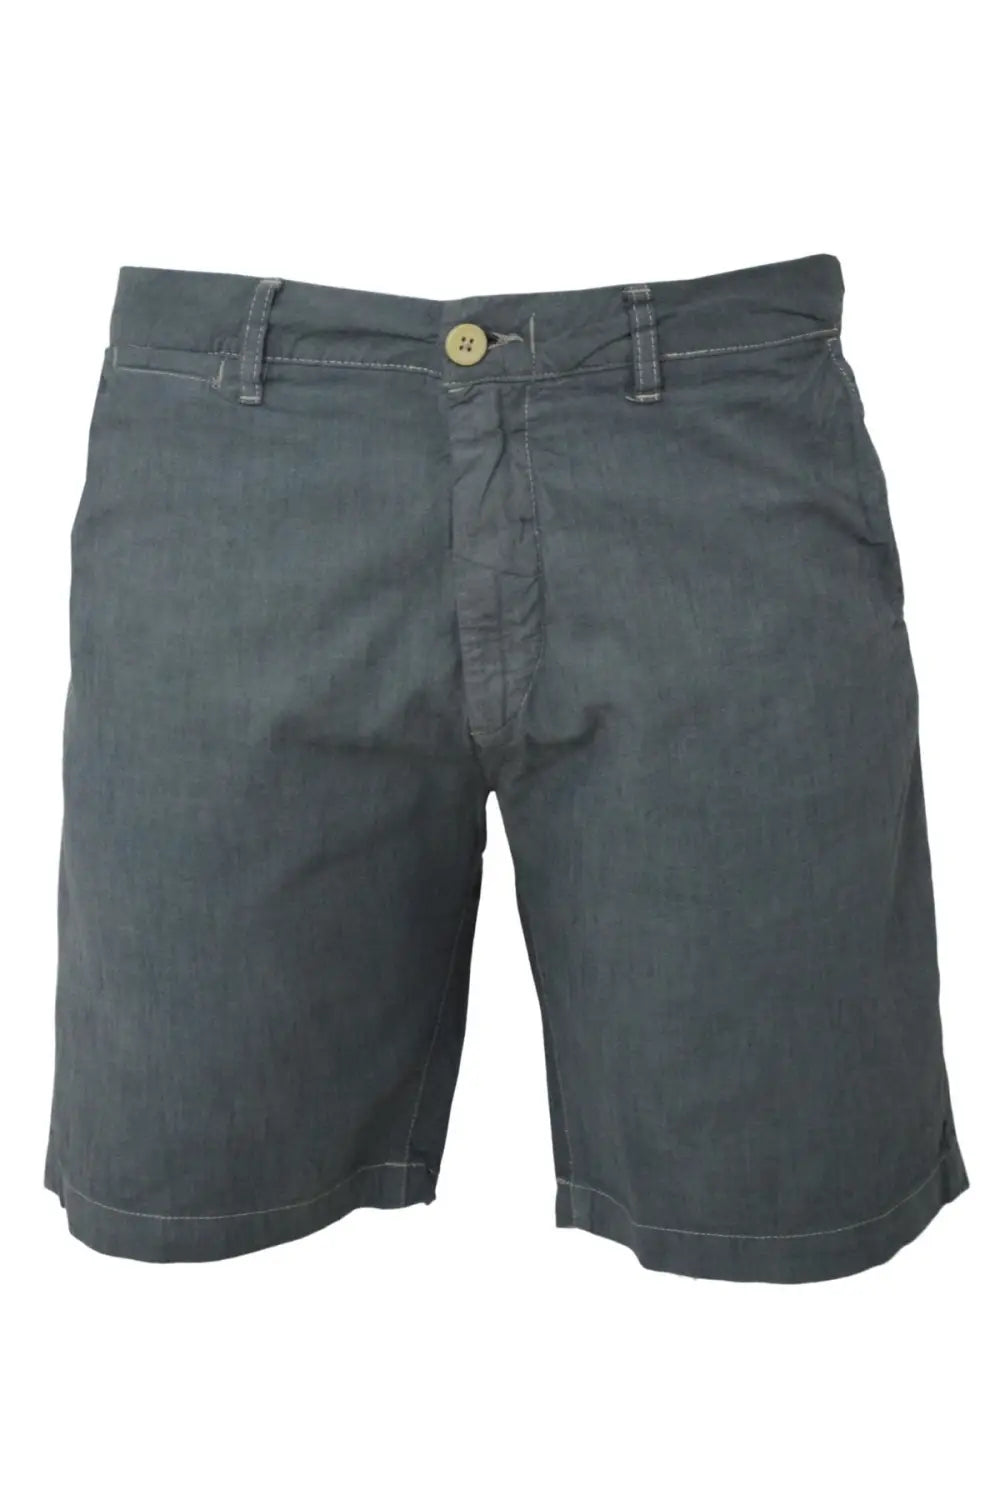 H&M Lightweight Cotton Chino Shorts